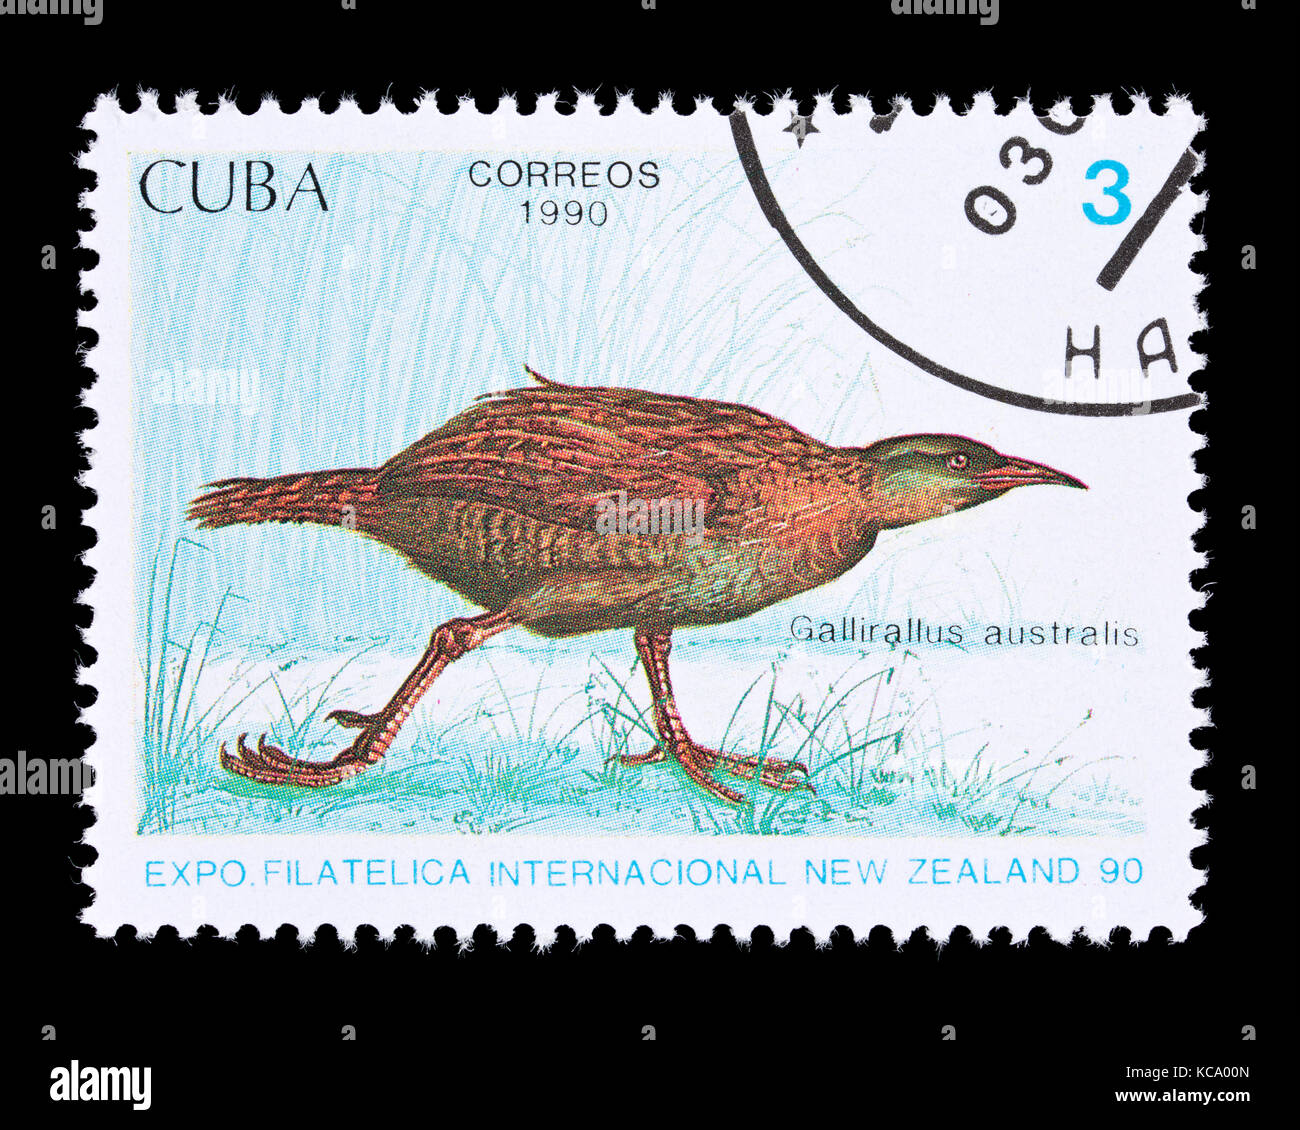 Postage stamp from Cuba depicting  weka (Gallirallus australis) Stock Photo